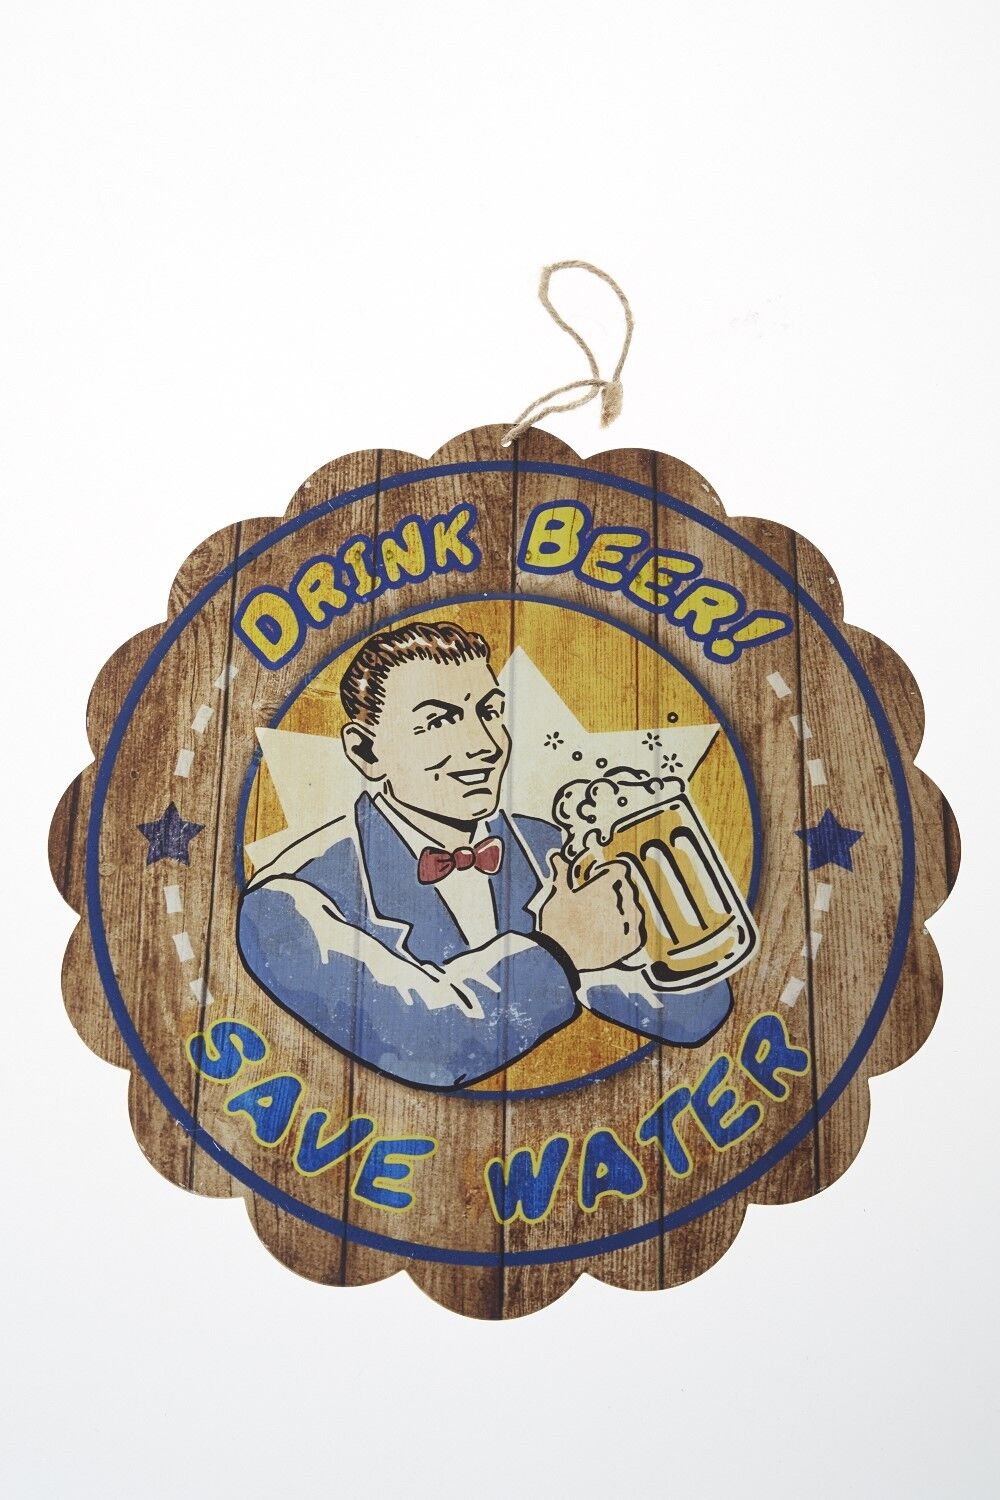 Decor Beer Metal Plate Sign Bar Pub Vintage Plaque Drink Retro Poster Style Idea